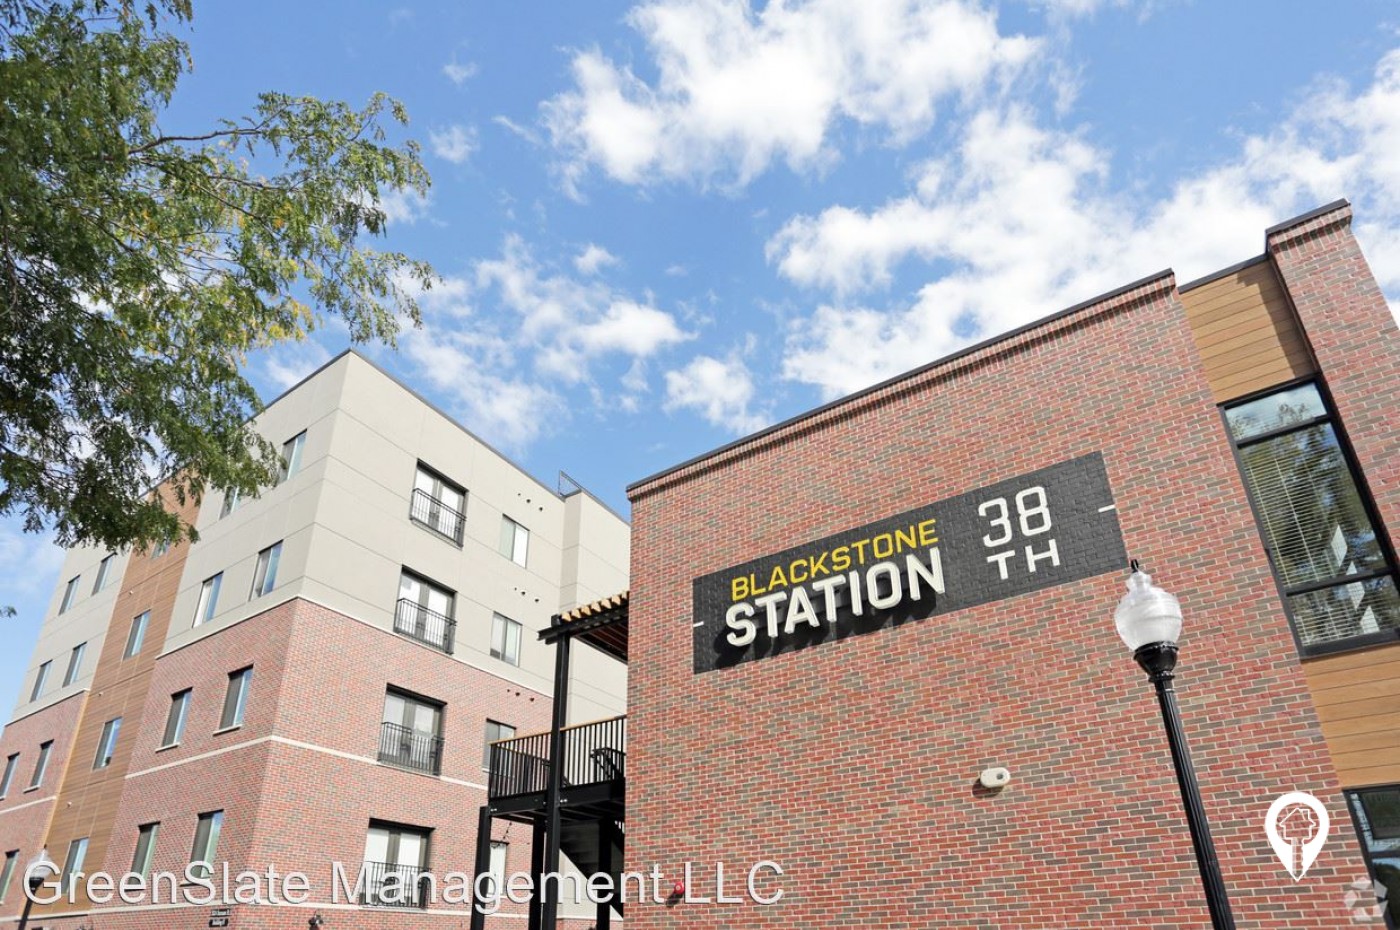 GreenSlate Management LLC - BlackStone Station Apartments